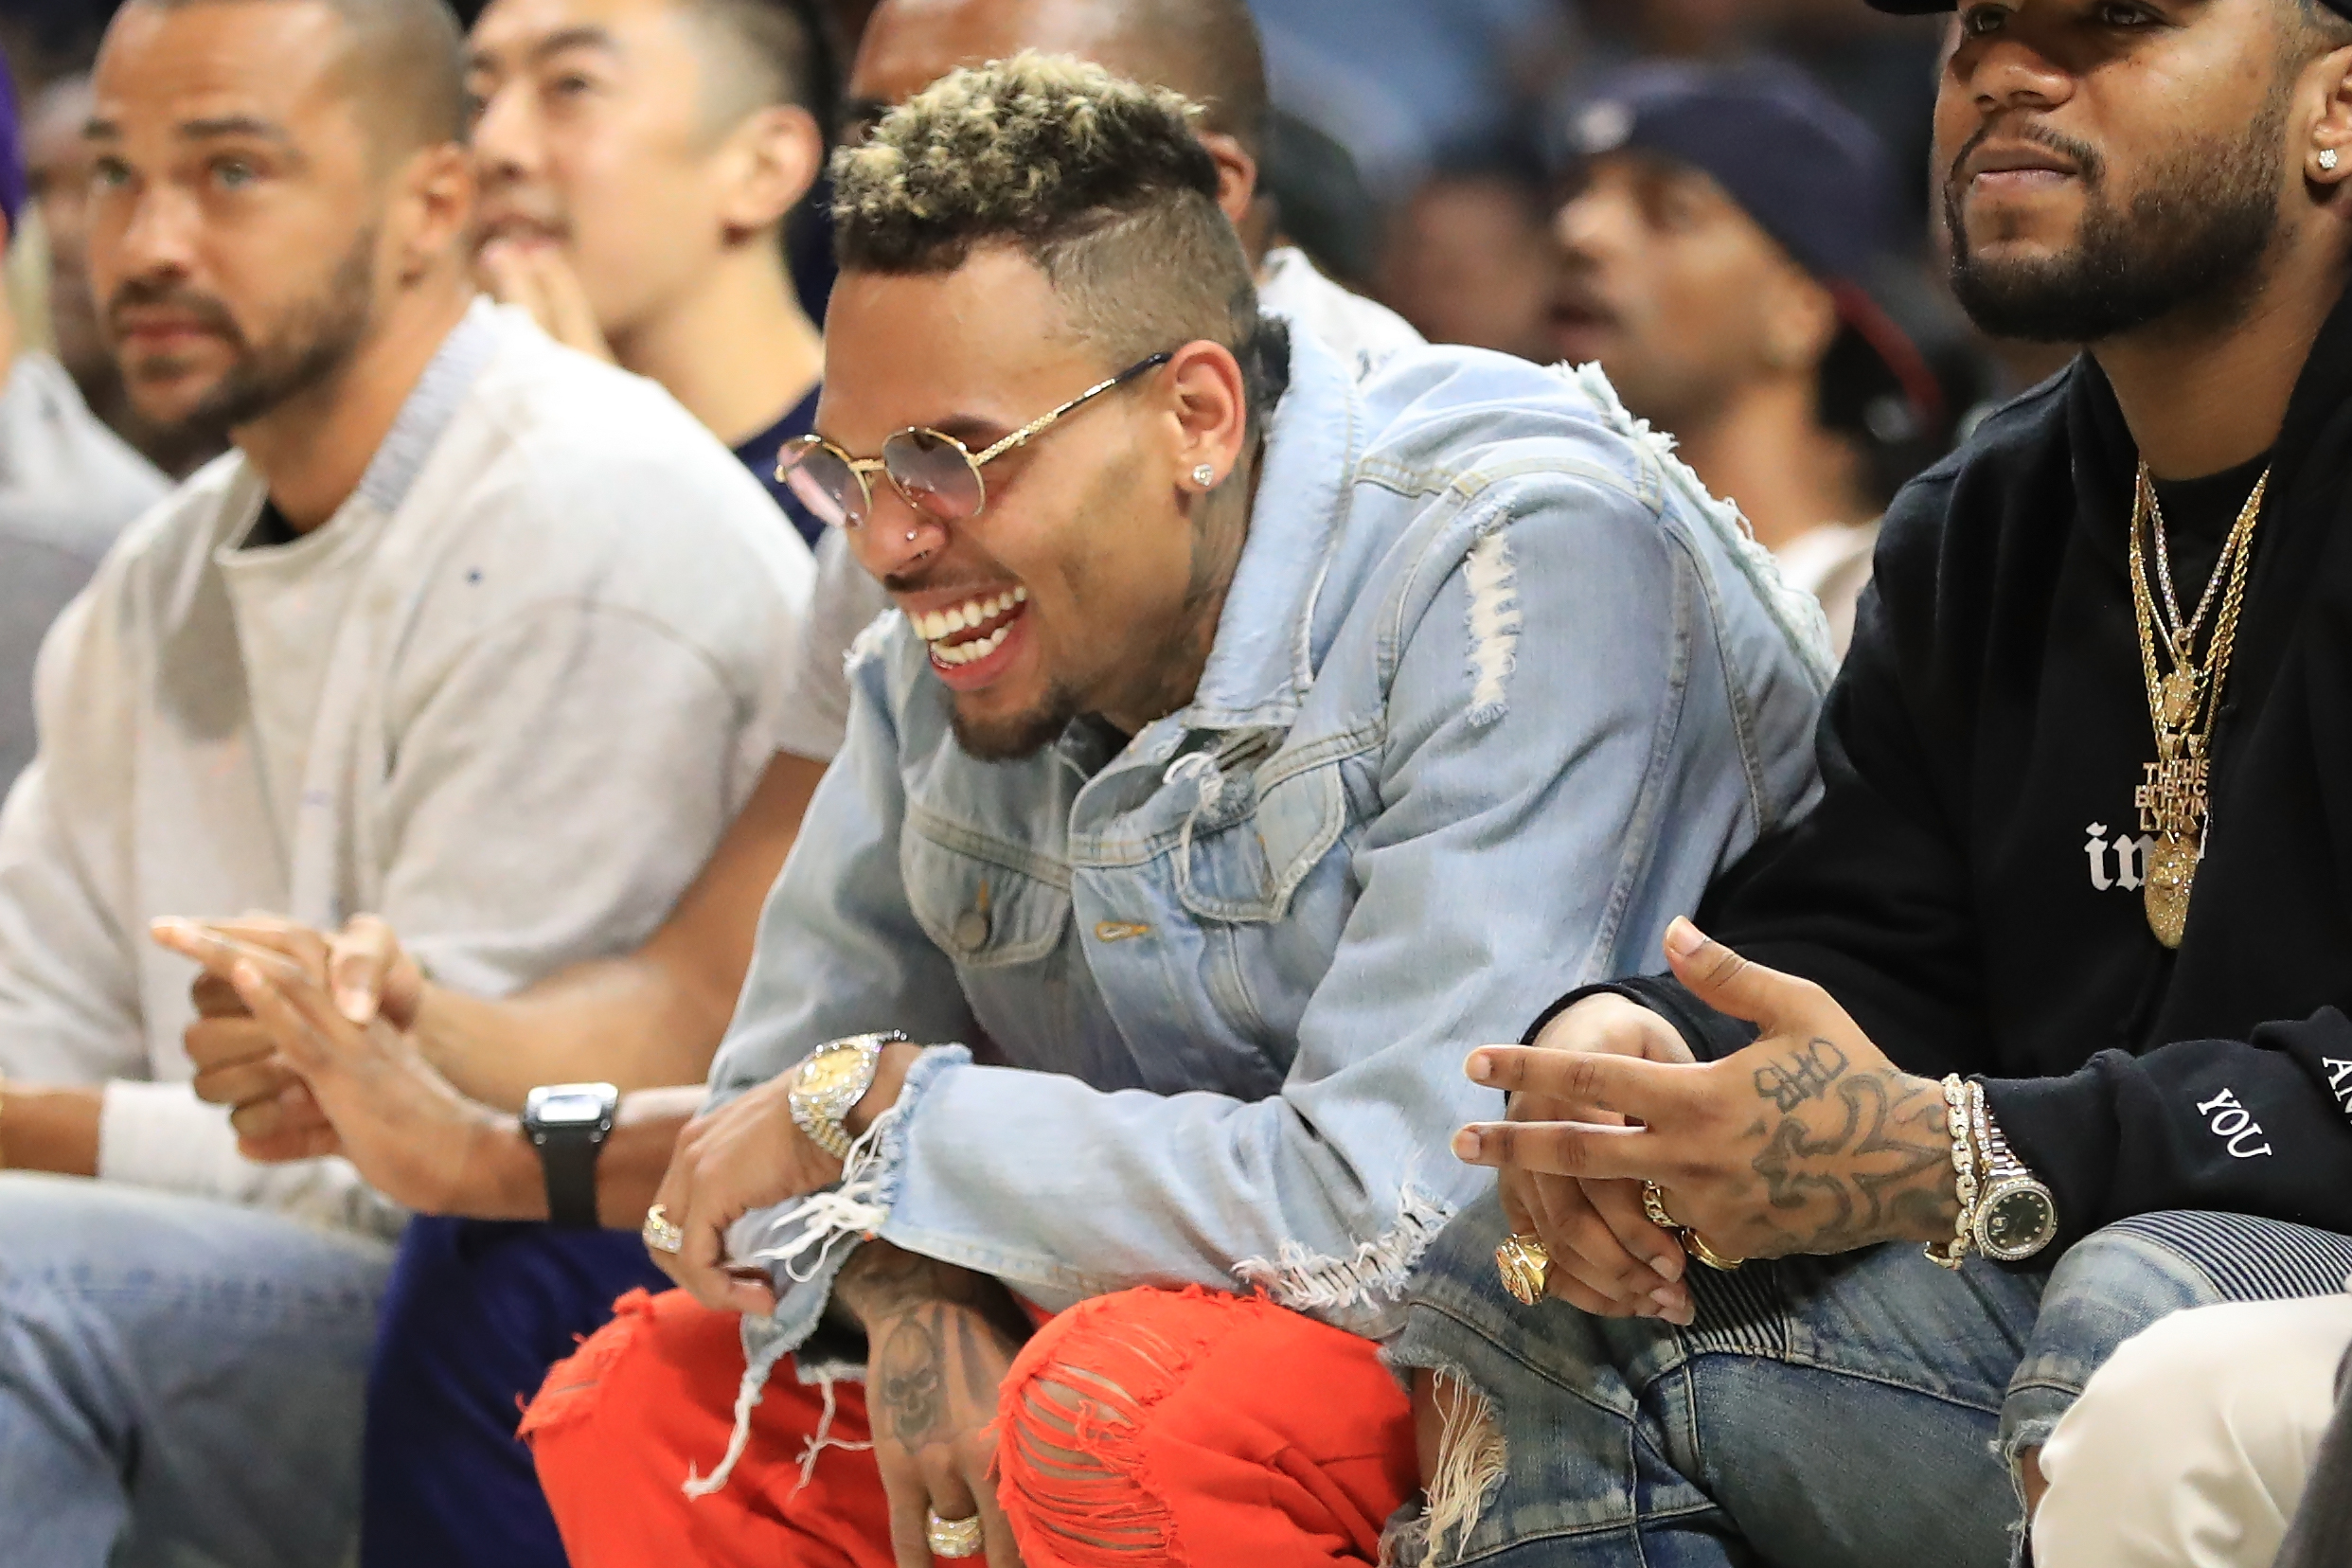 Chris Brown Co-Signs B.o.B.’s Conspiracy Theories